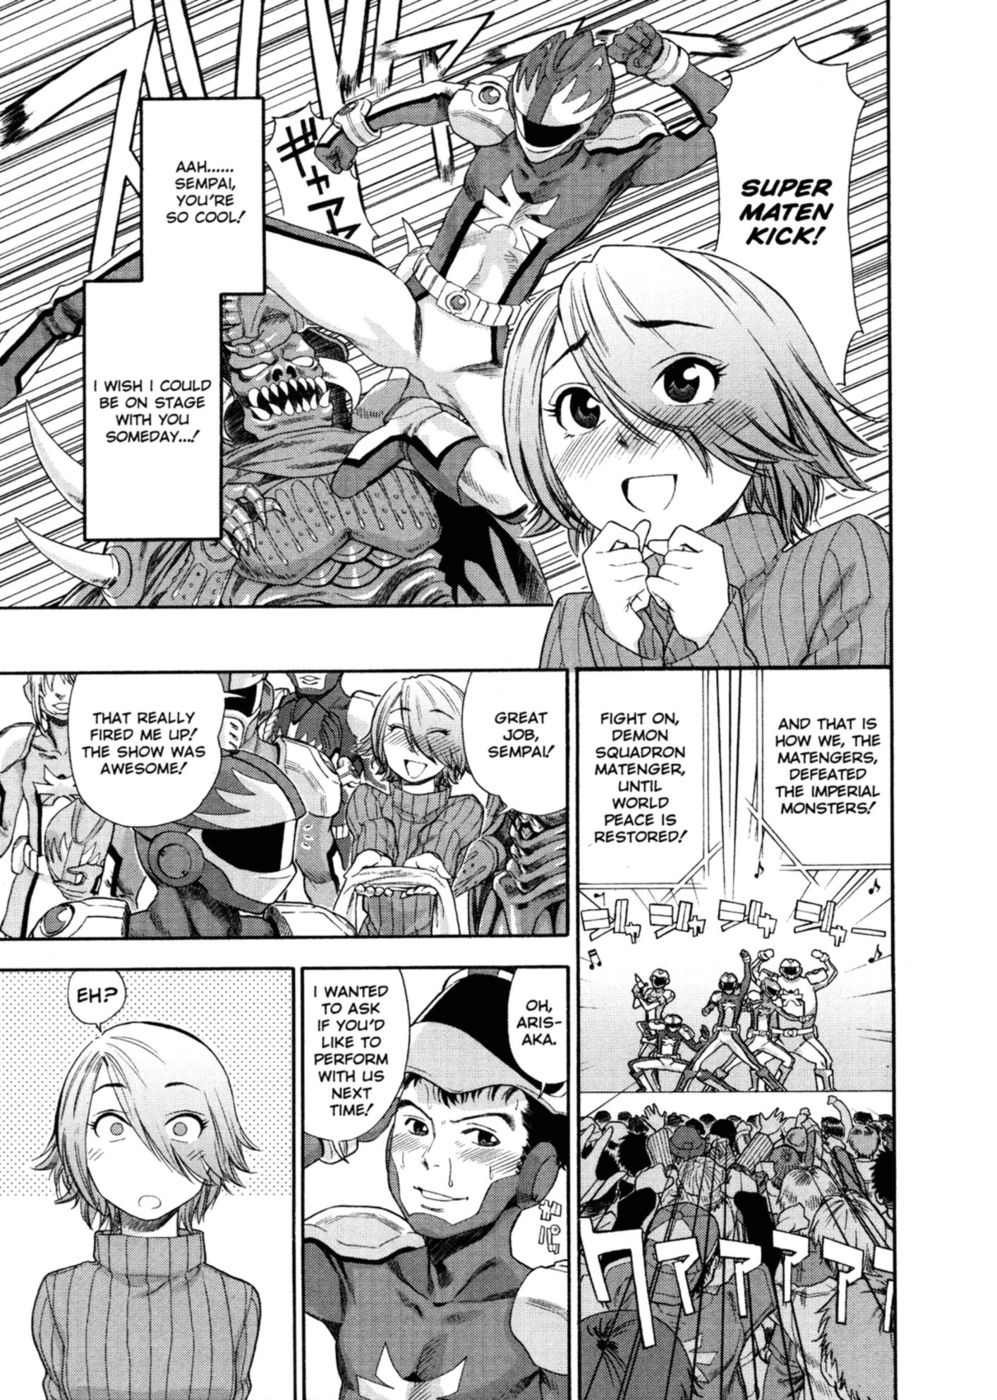 Hentai Manga Comic-Aqua Bless-Chapter 5-Demon Souroron Hatenger-1